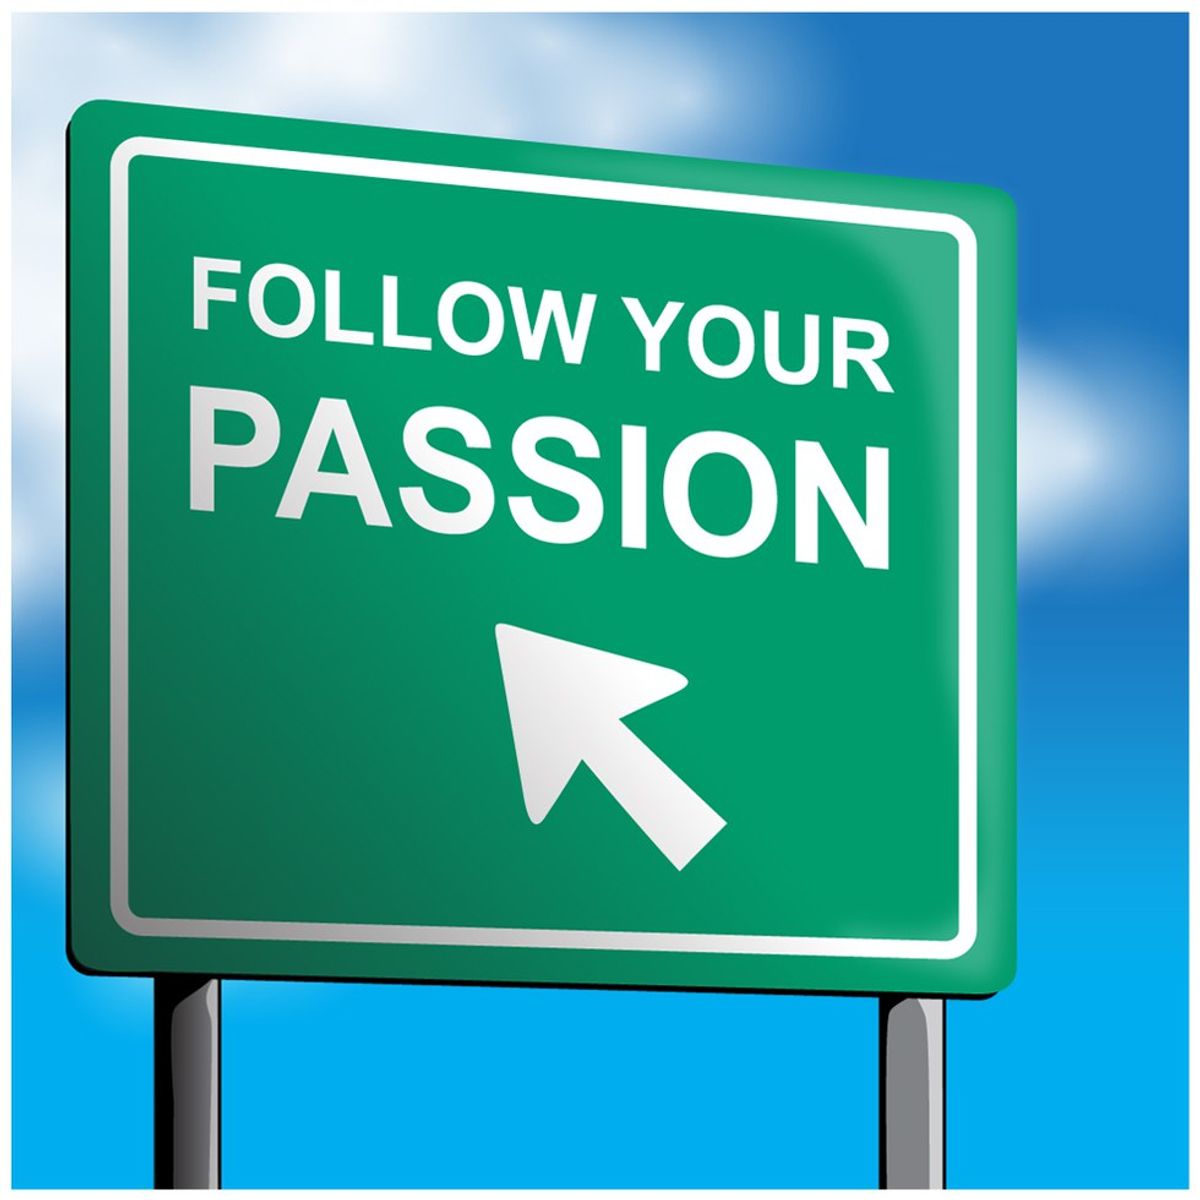 The Pursuit of Passion